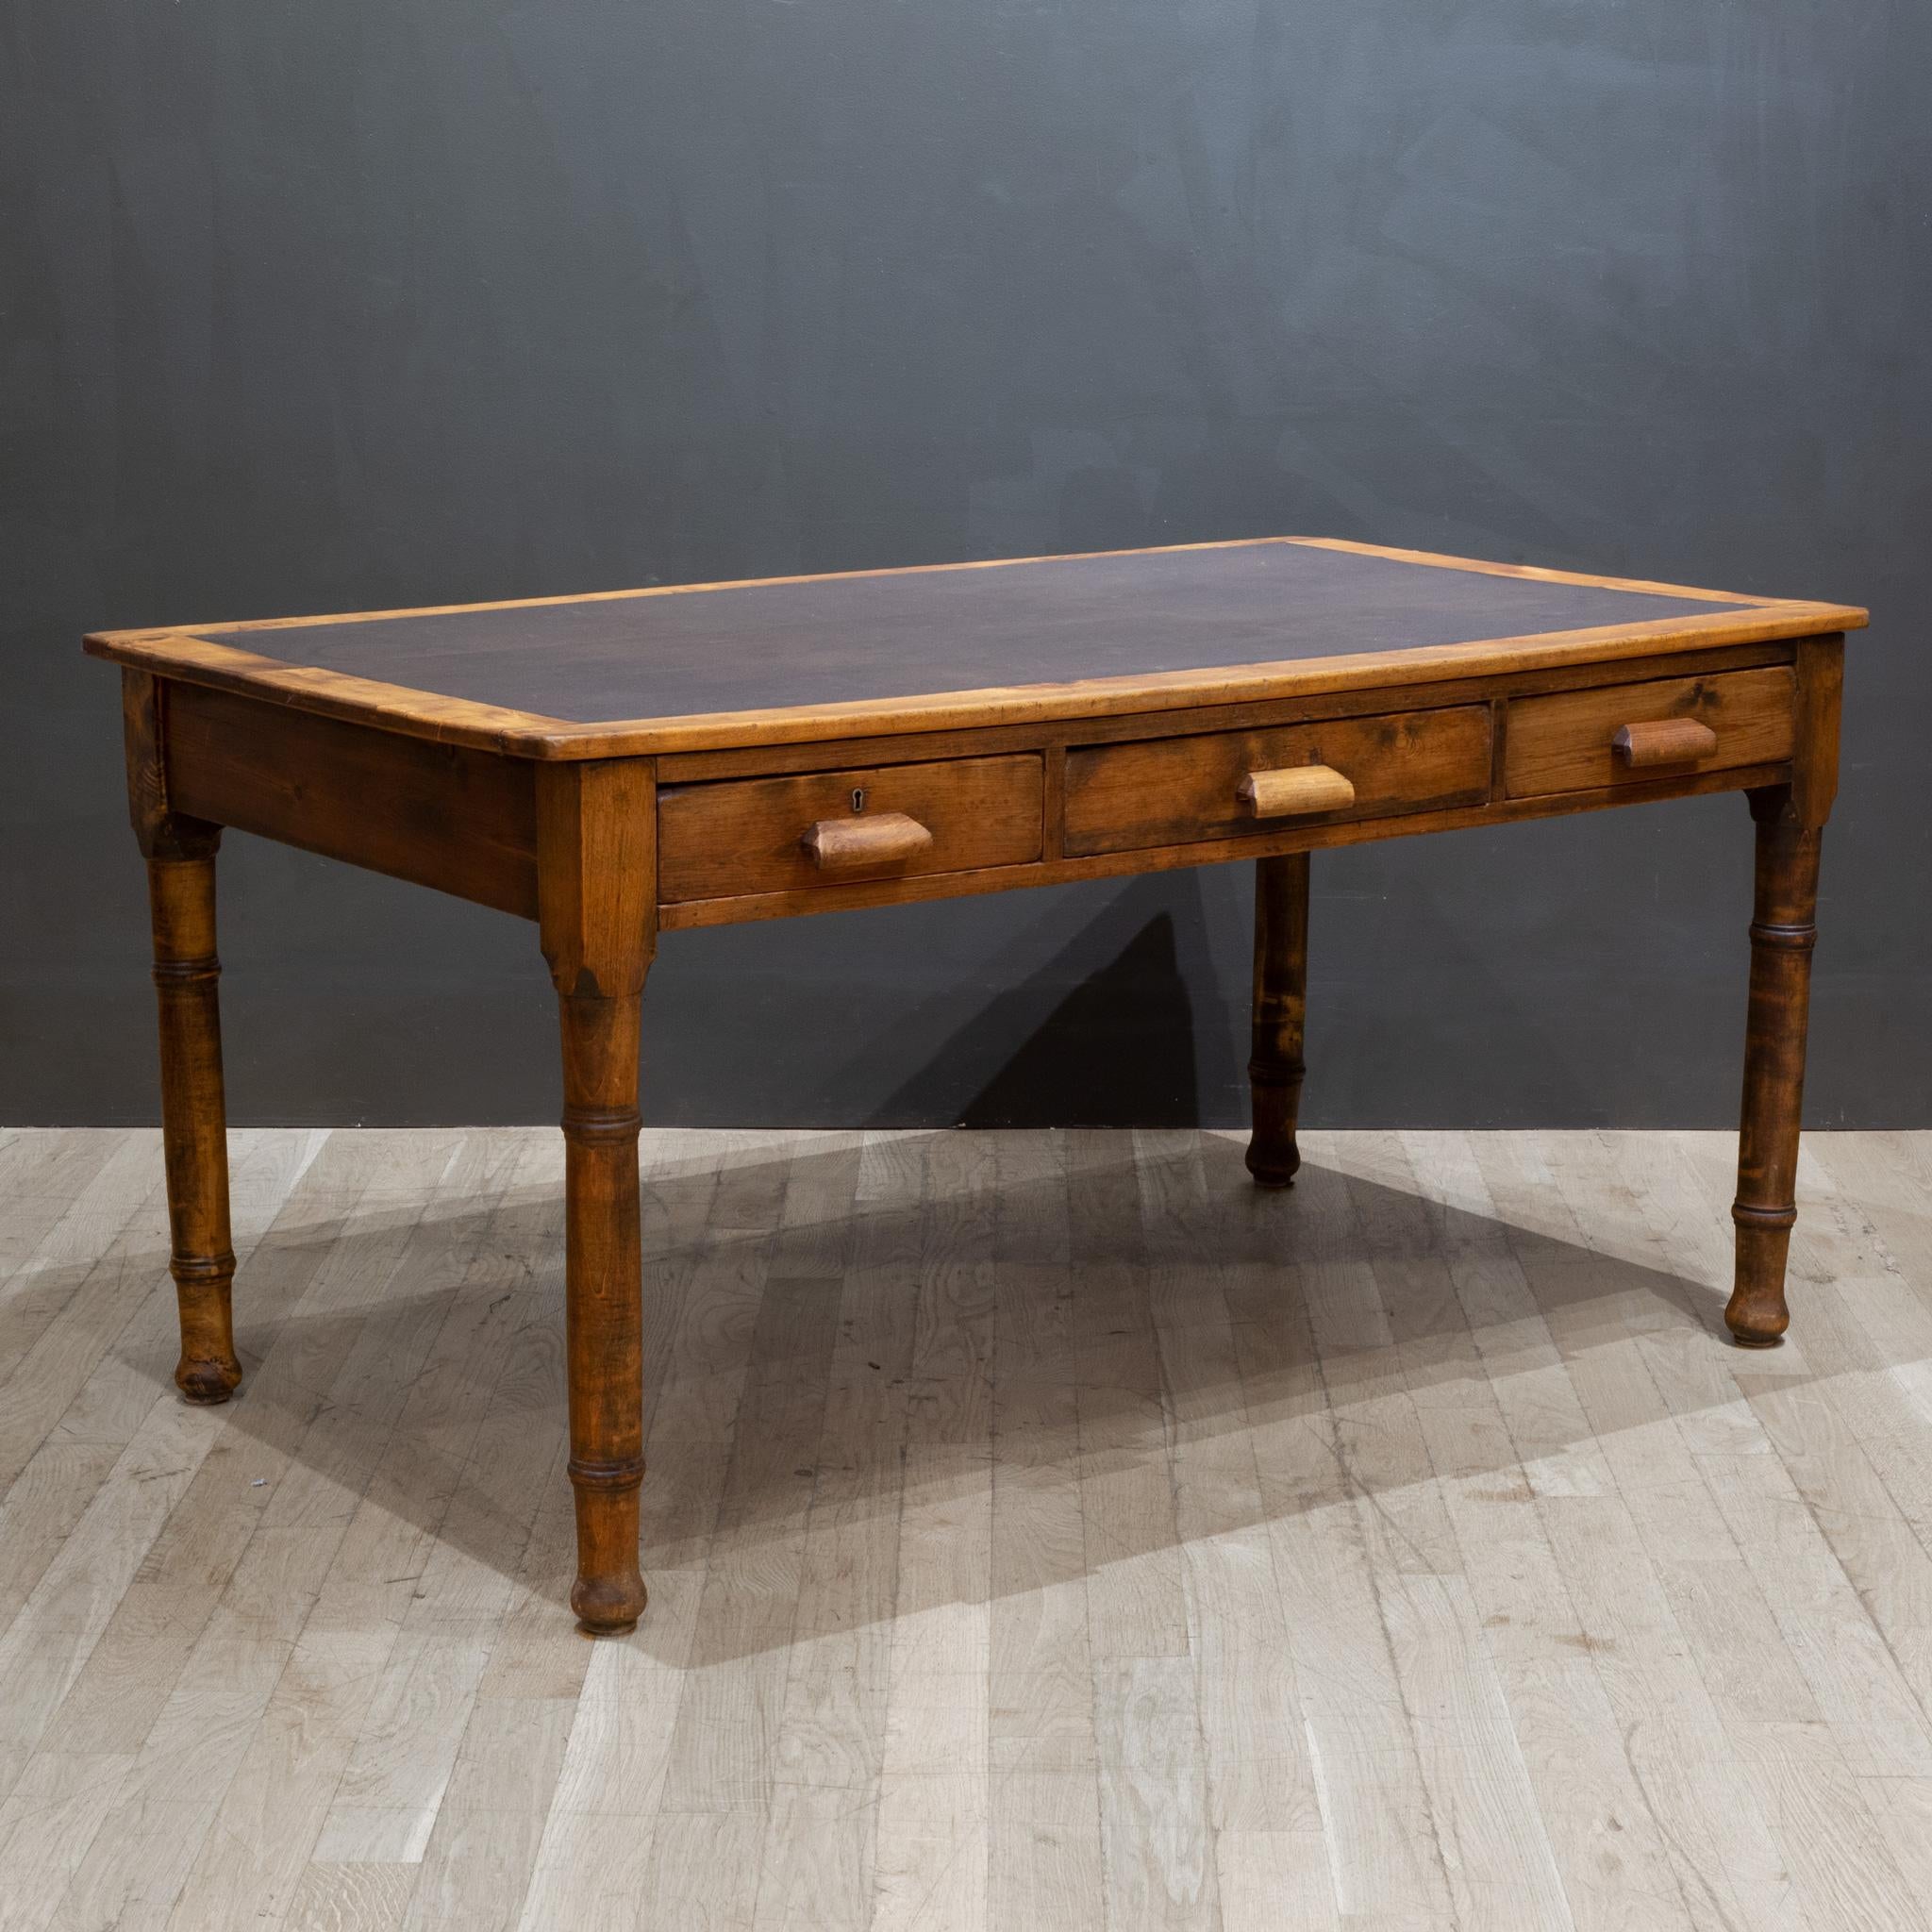 Victorian Early 20th c. English Three Drawer Desk c. 1930-1950